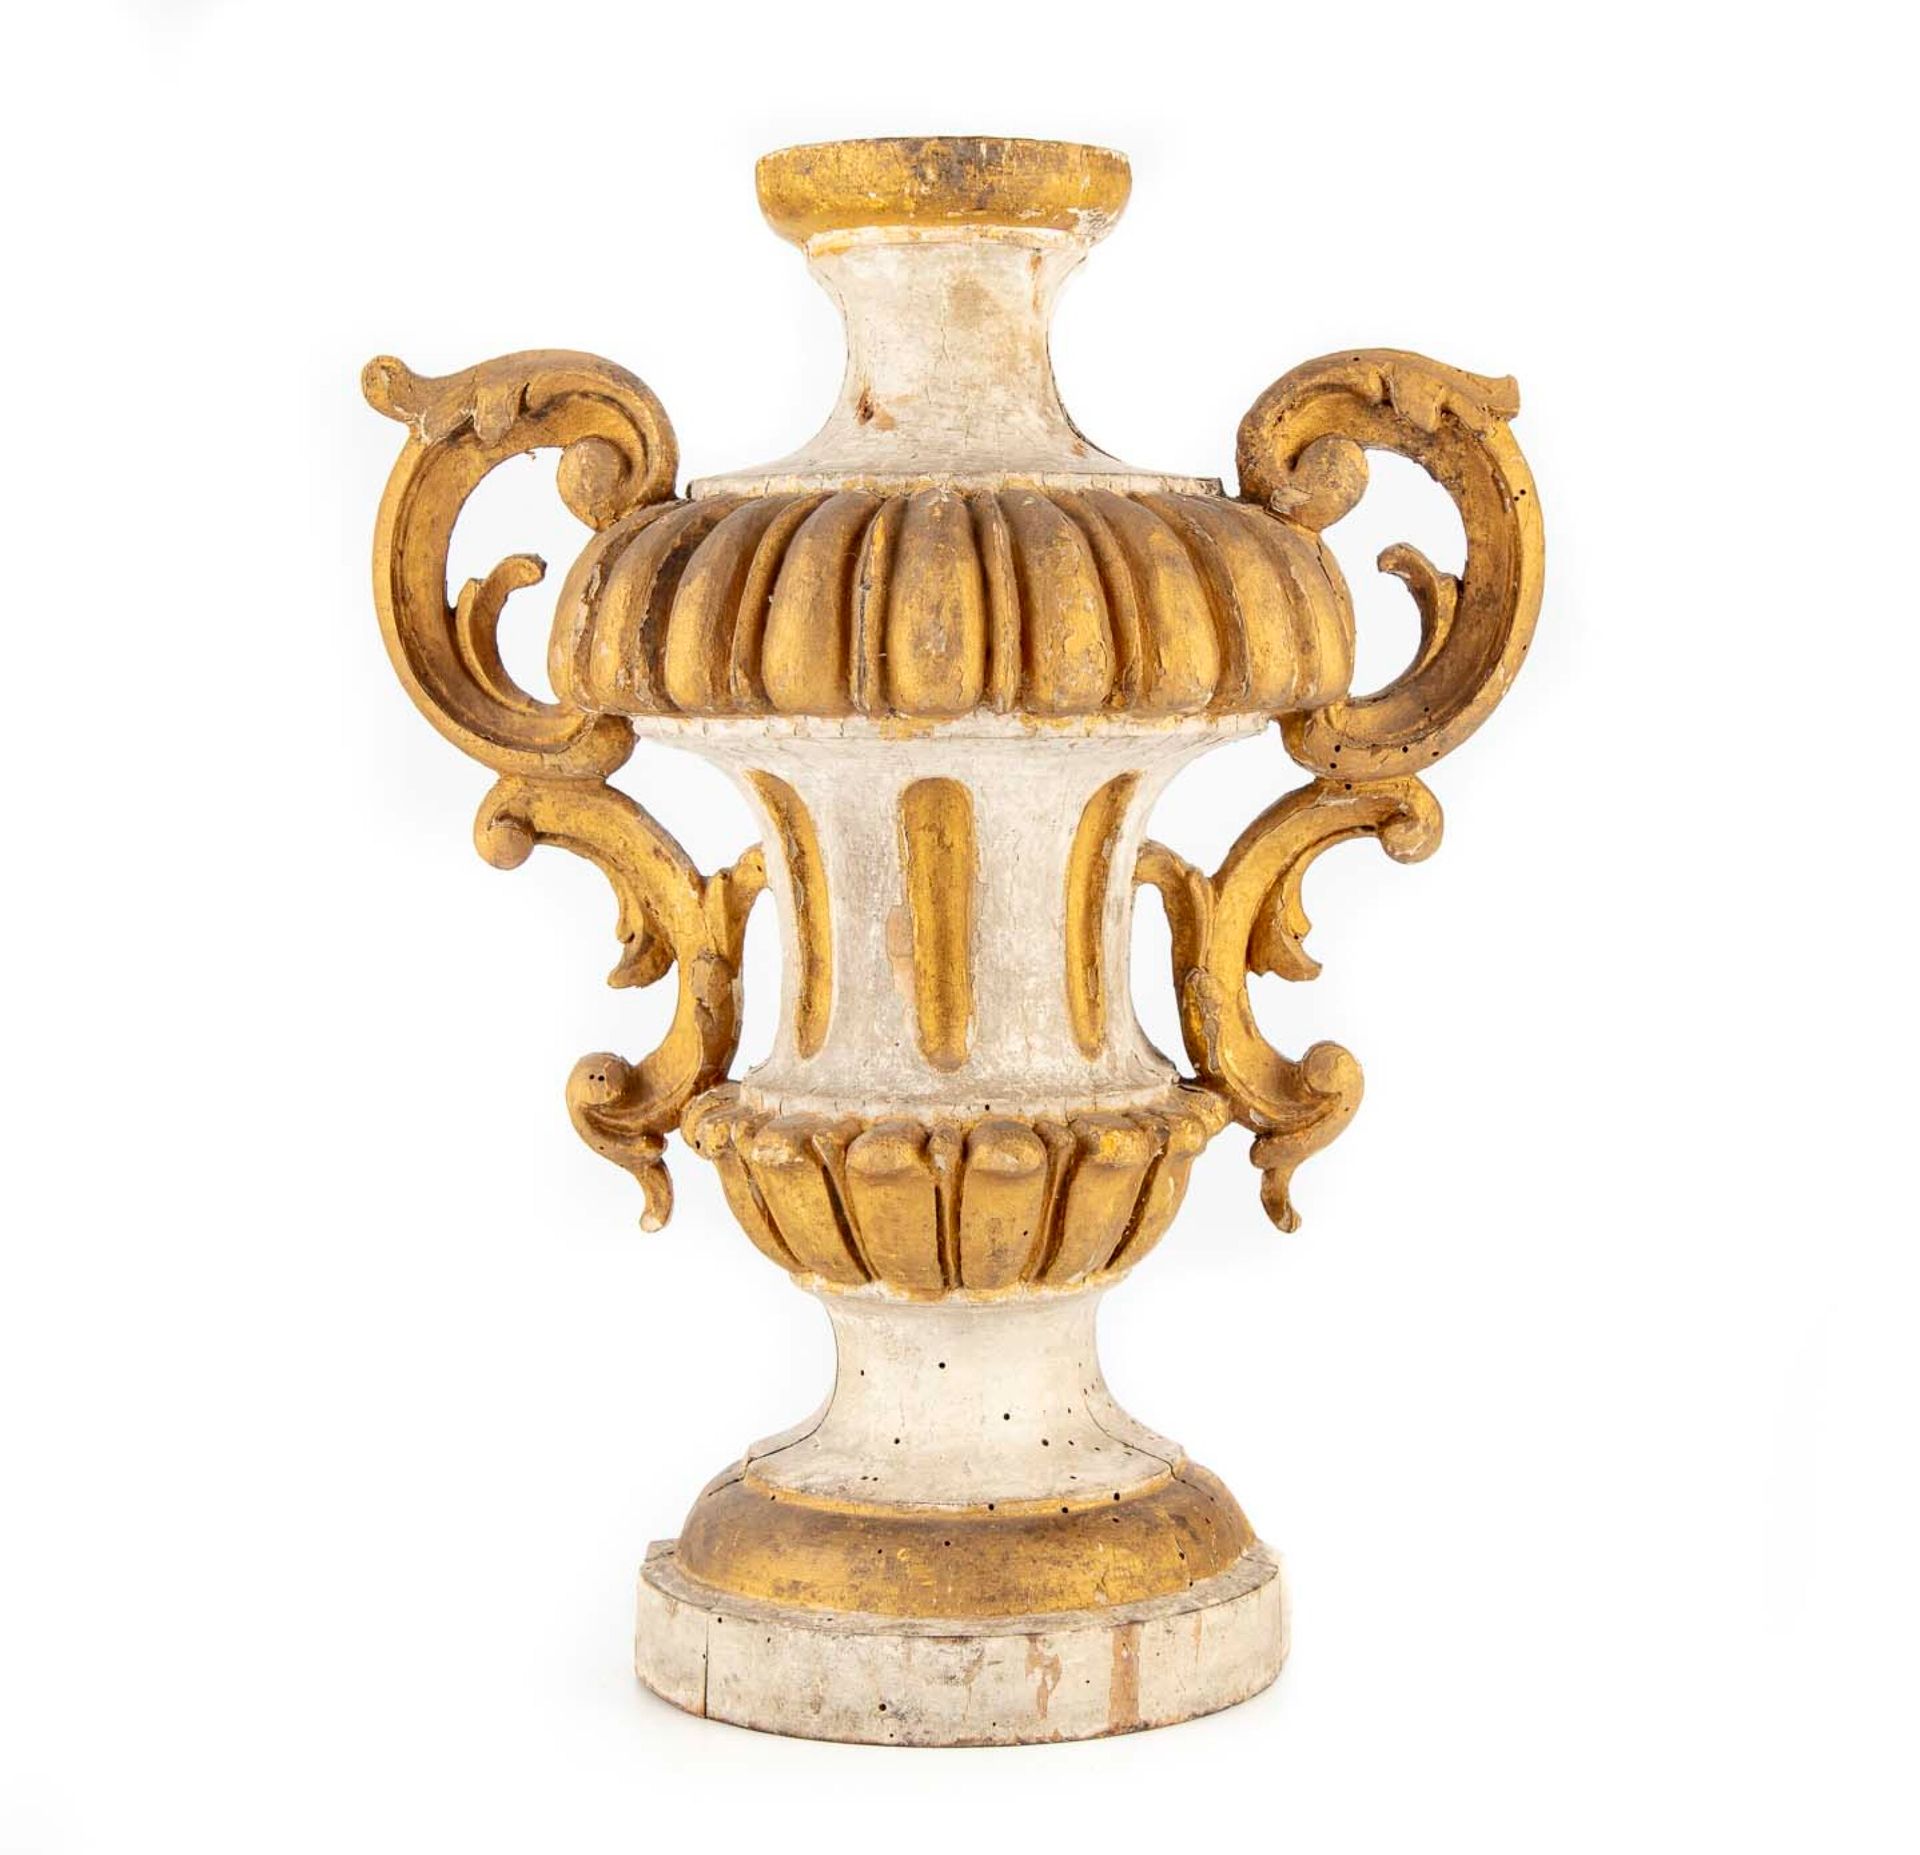 Null 美第奇花瓶形状的漆面和镀金木质贴花装饰

18世纪风格

H.33厘米